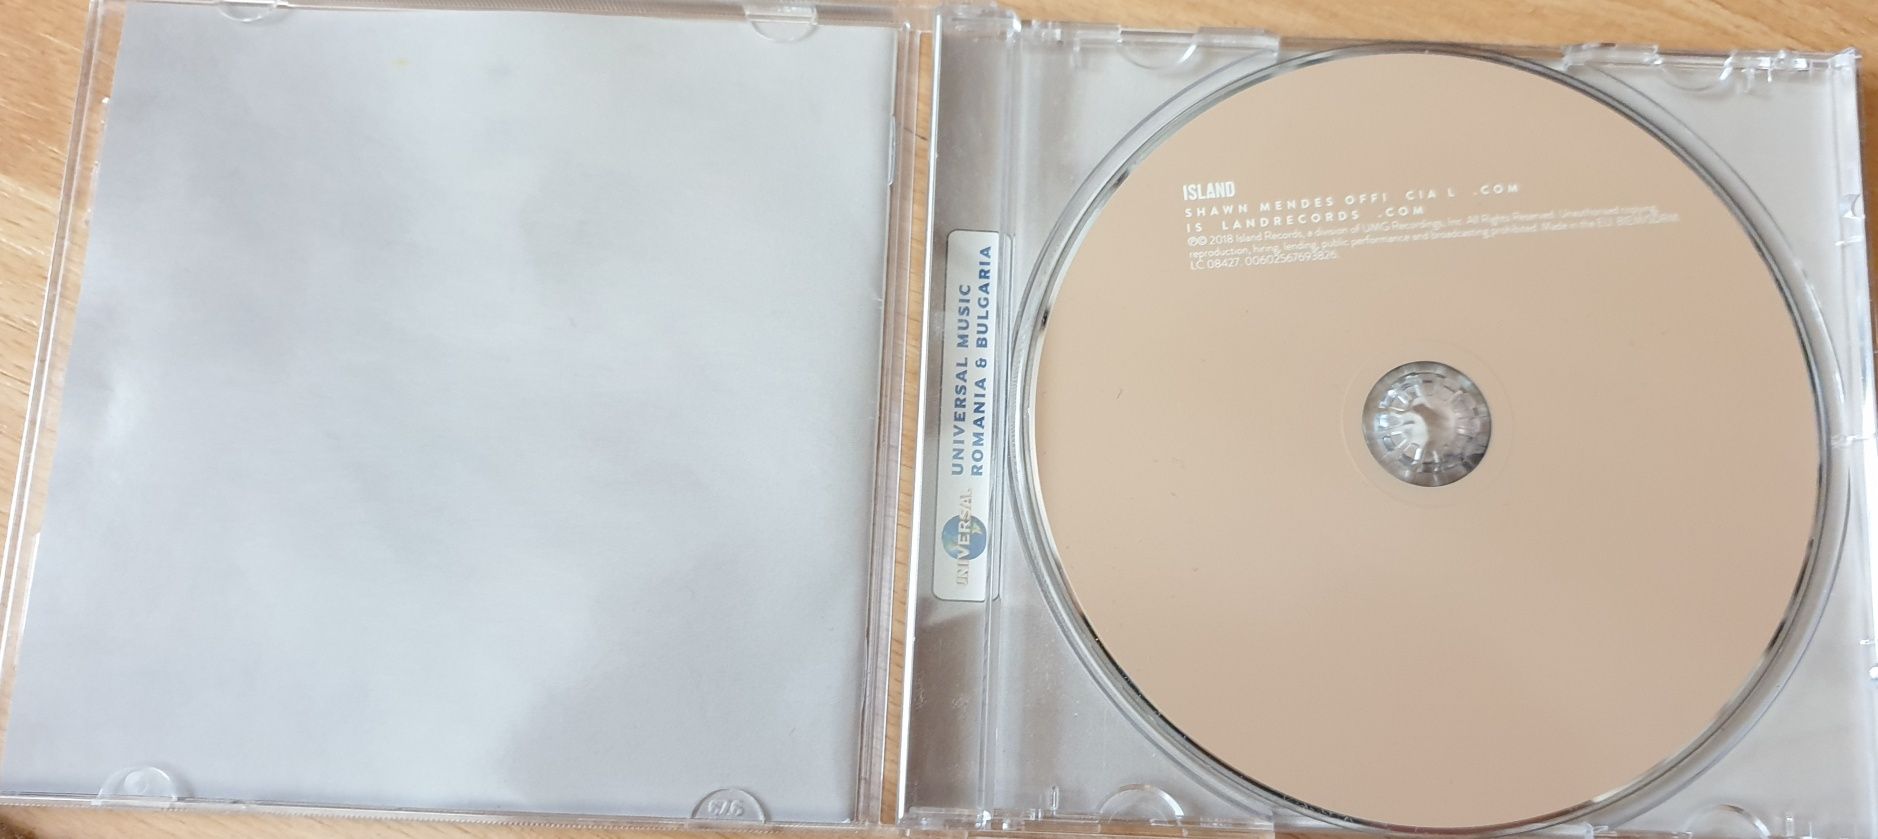 CD-uri cu muzica Shawn Mendes si Marc Anthony